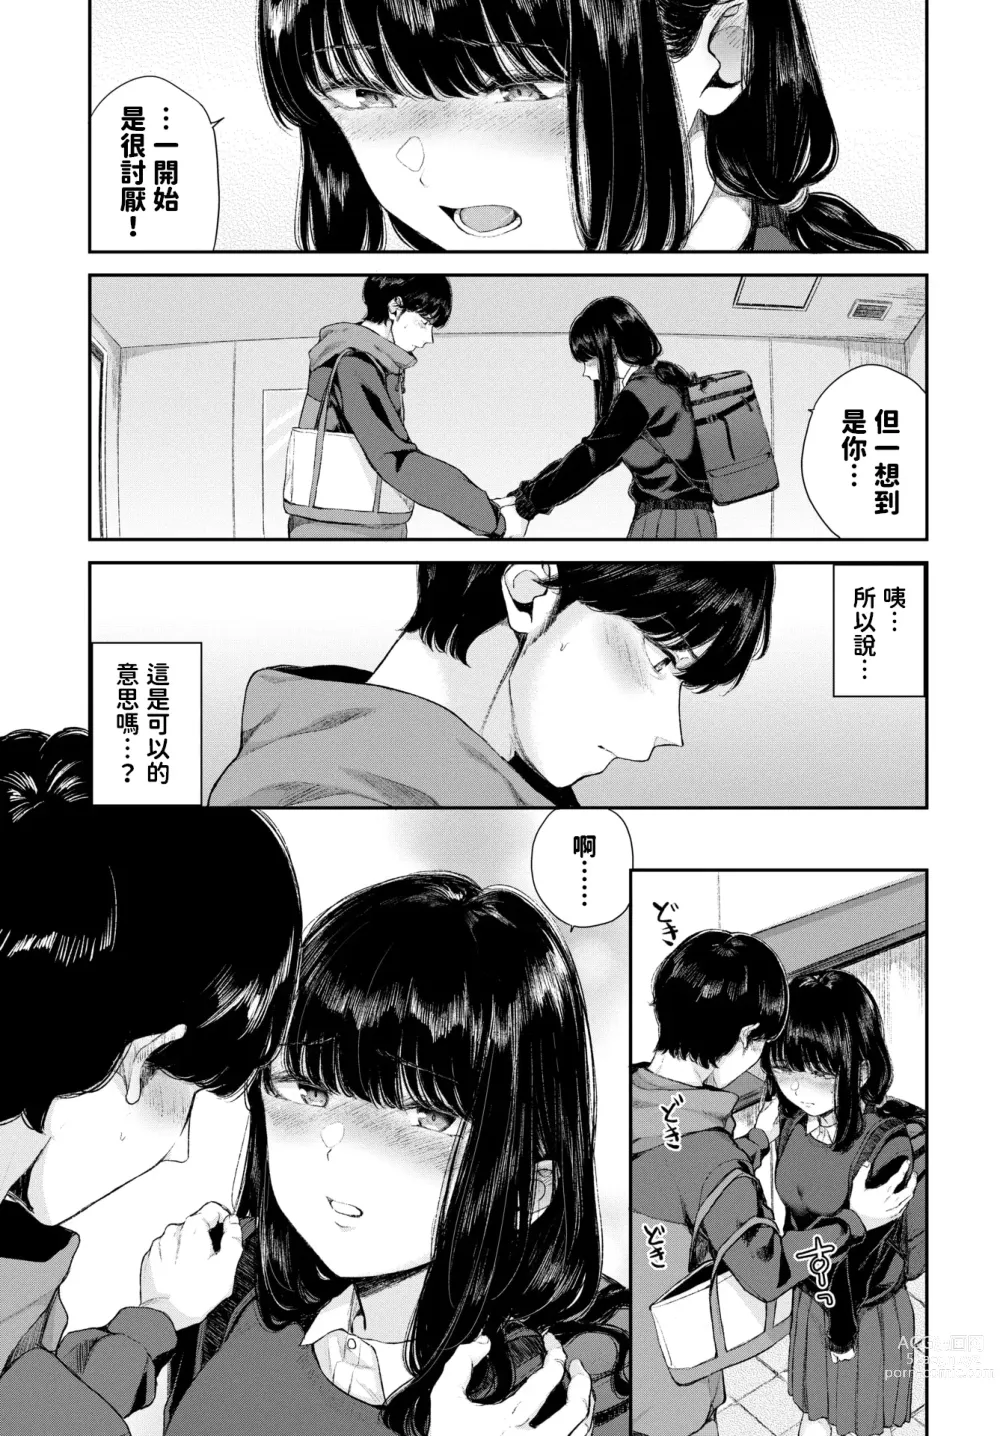 Page 9 of manga Yuki Zuri to Ao - passing by and blue.